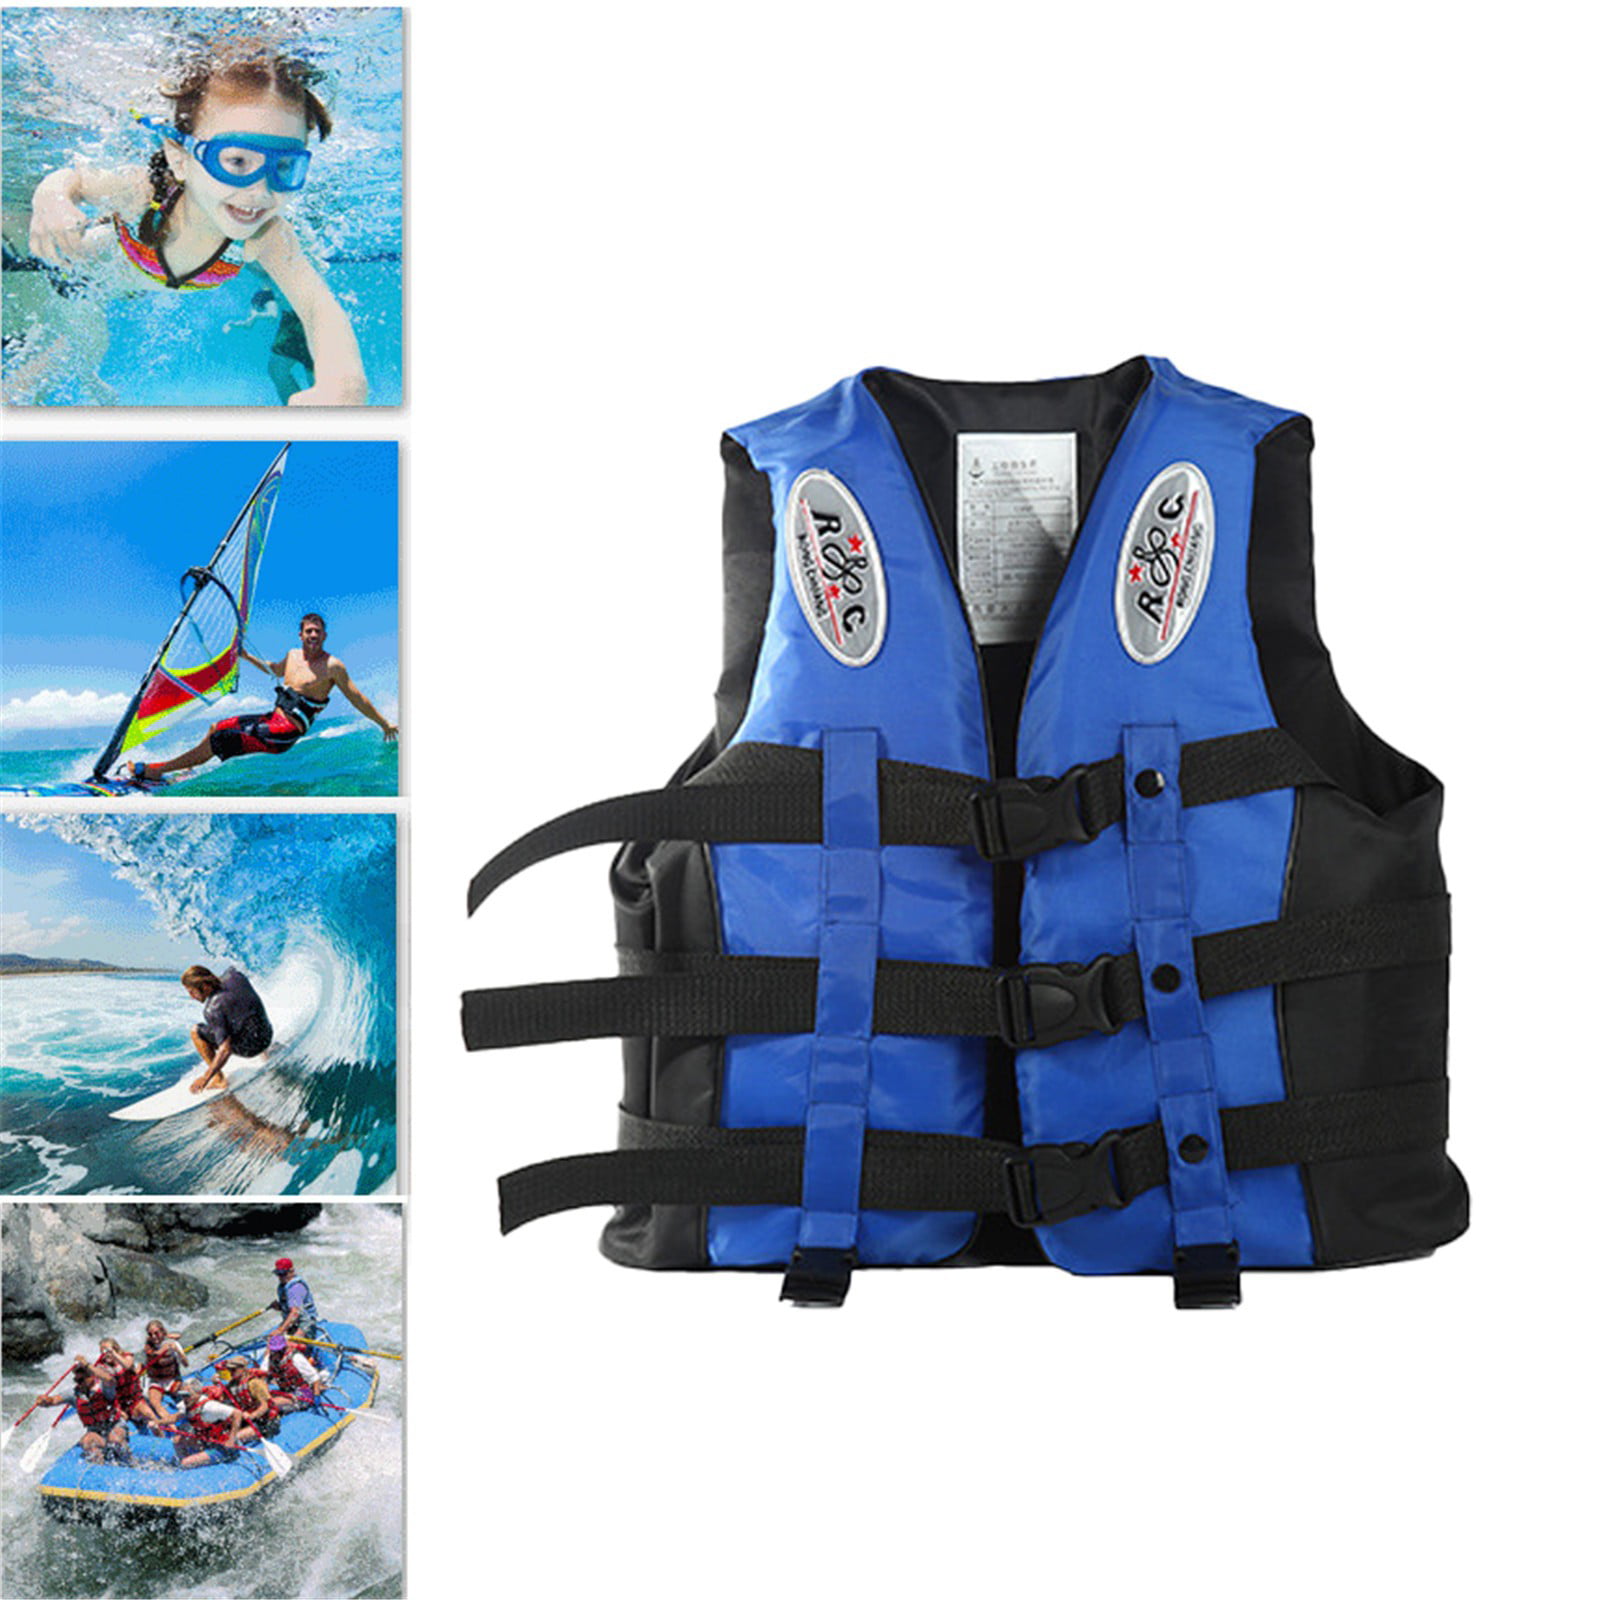 US Adult Kids Life Jacket Kayak Ski Buoyancy Aid Vest Sailing Fishing Watersport 